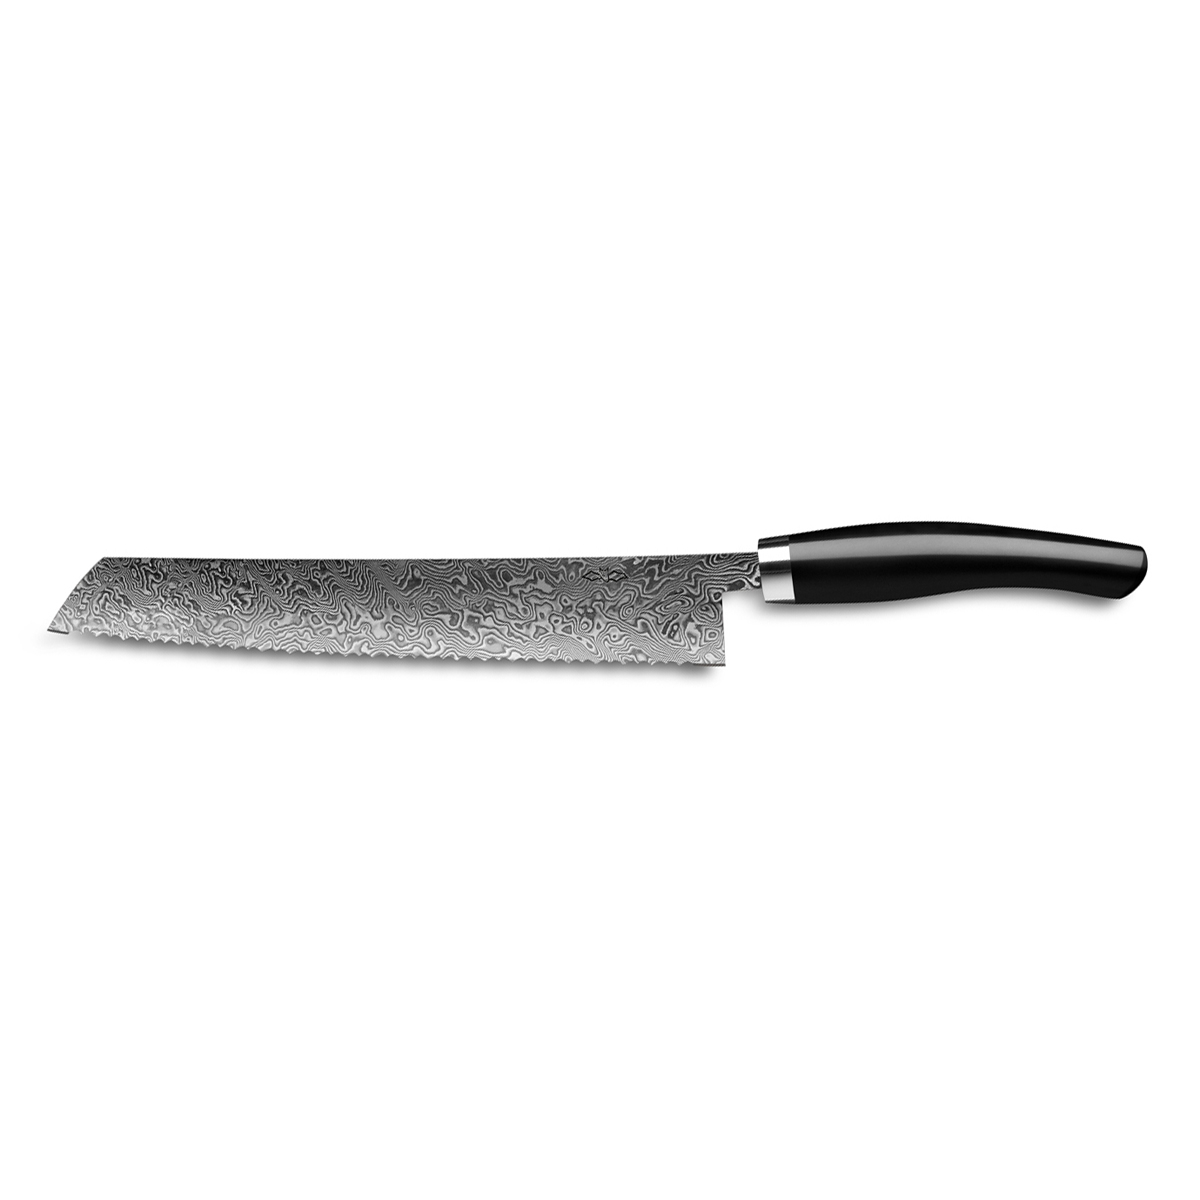 Nesmuk Exklusiv C 90 Damast Brotmesser 27 cm - Griff Juma Black